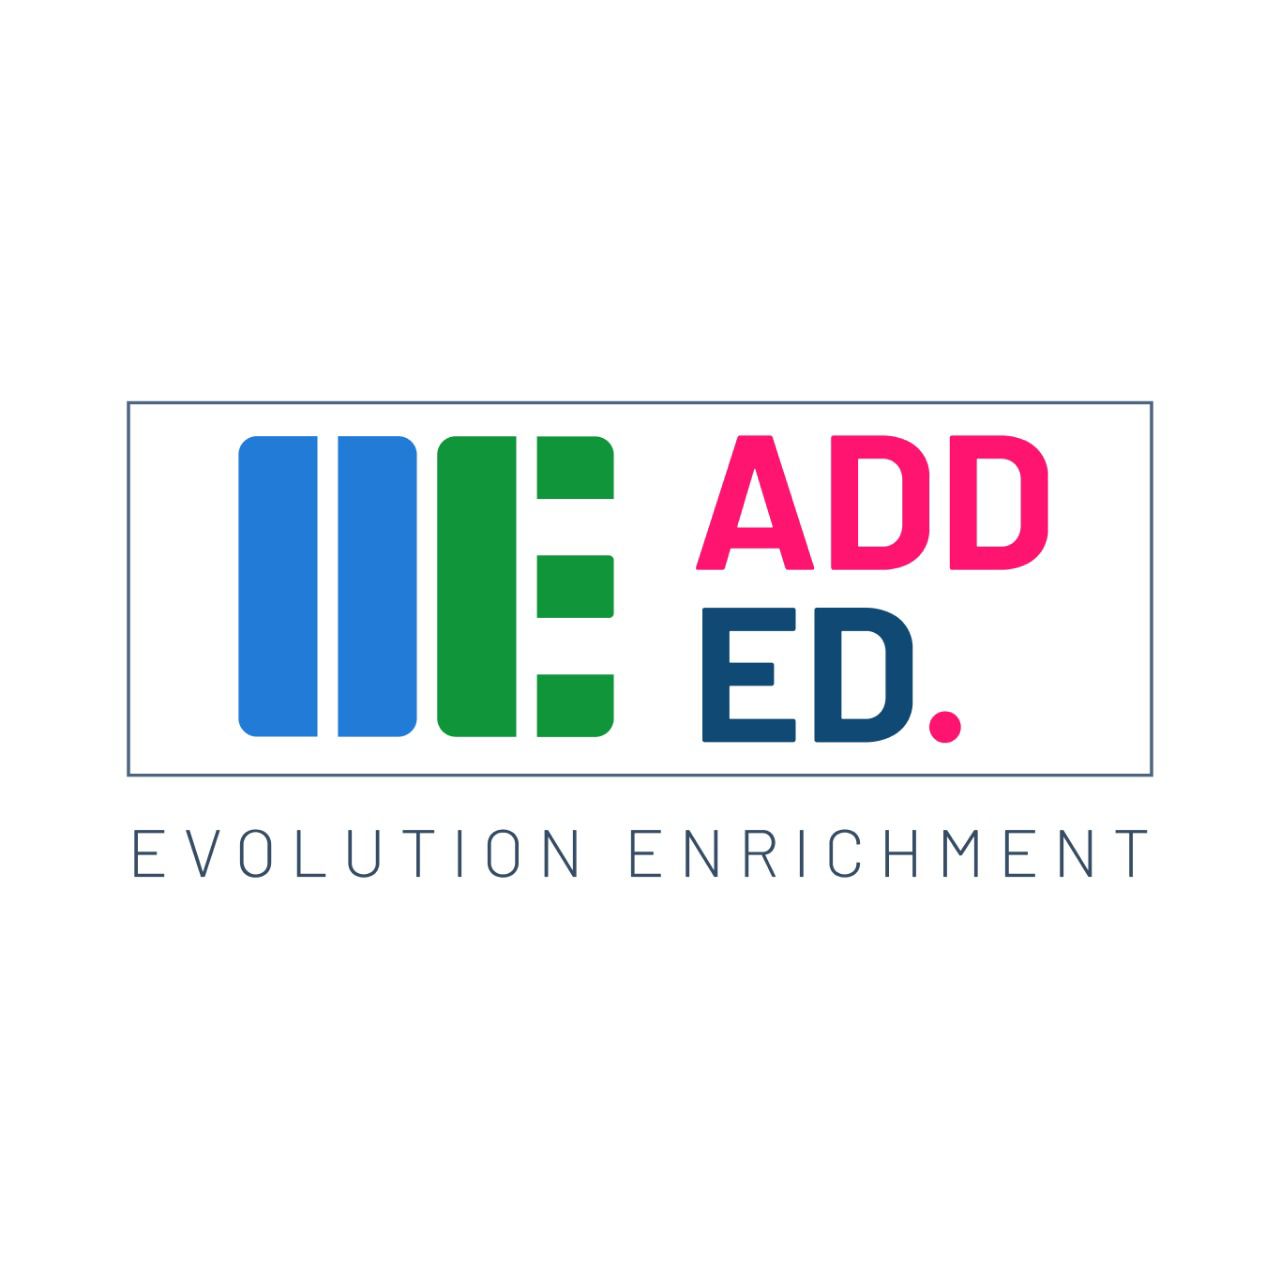 Add-EduTech Learning offers unique chess program for children